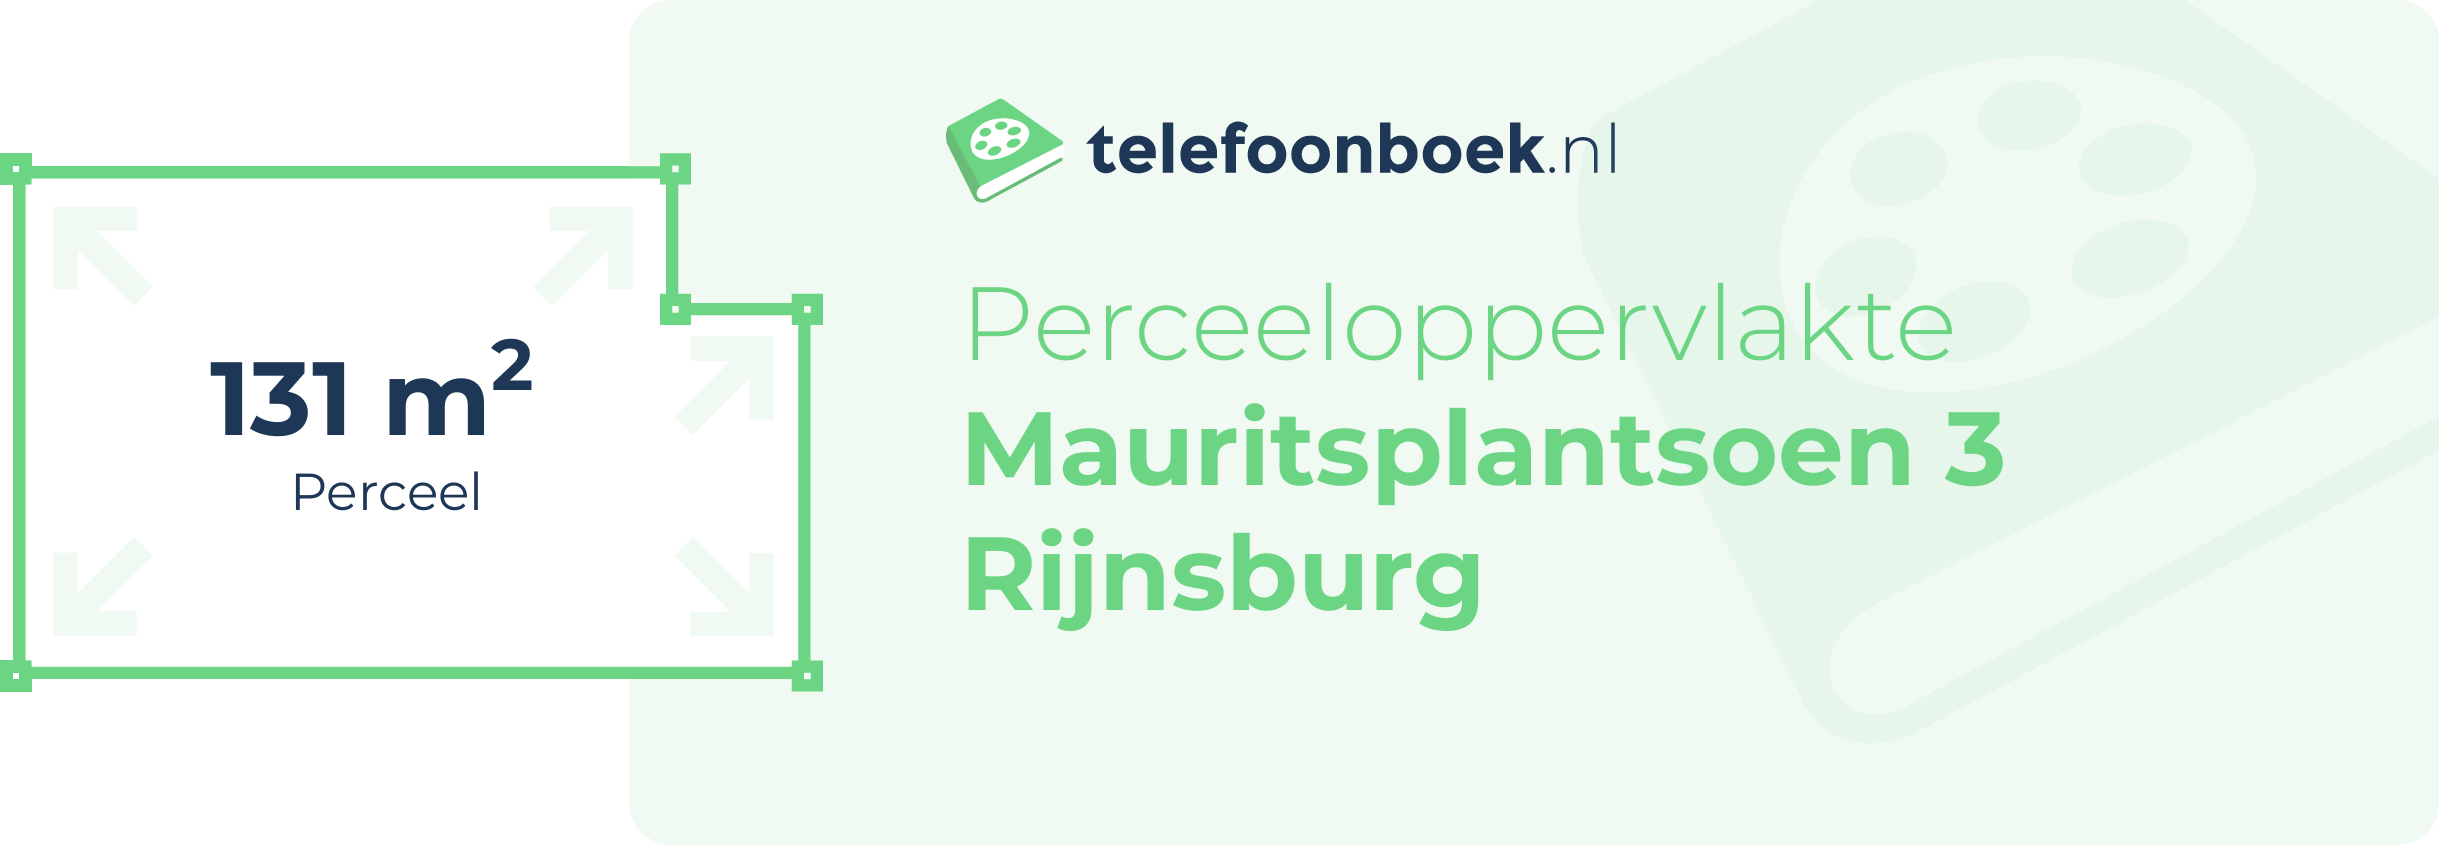 Perceeloppervlakte Mauritsplantsoen 3 Rijnsburg